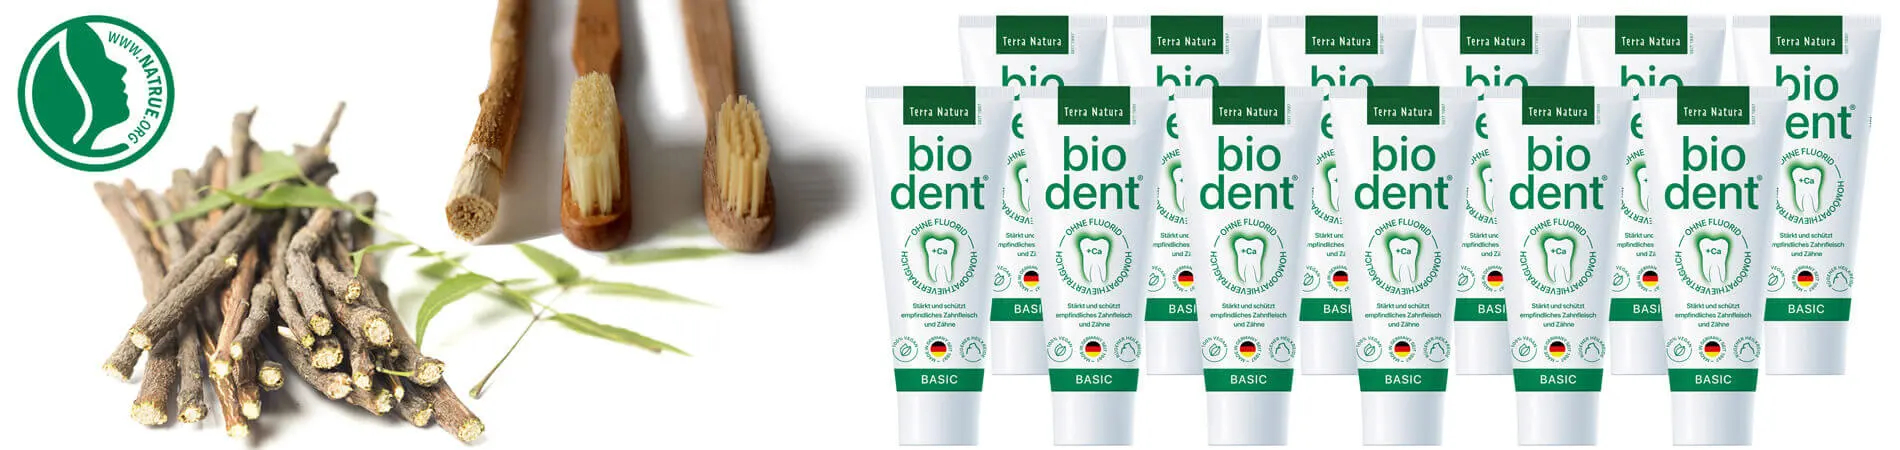 Biodent Basics Fluoride-Free Toothpaste Shop Bio dent...